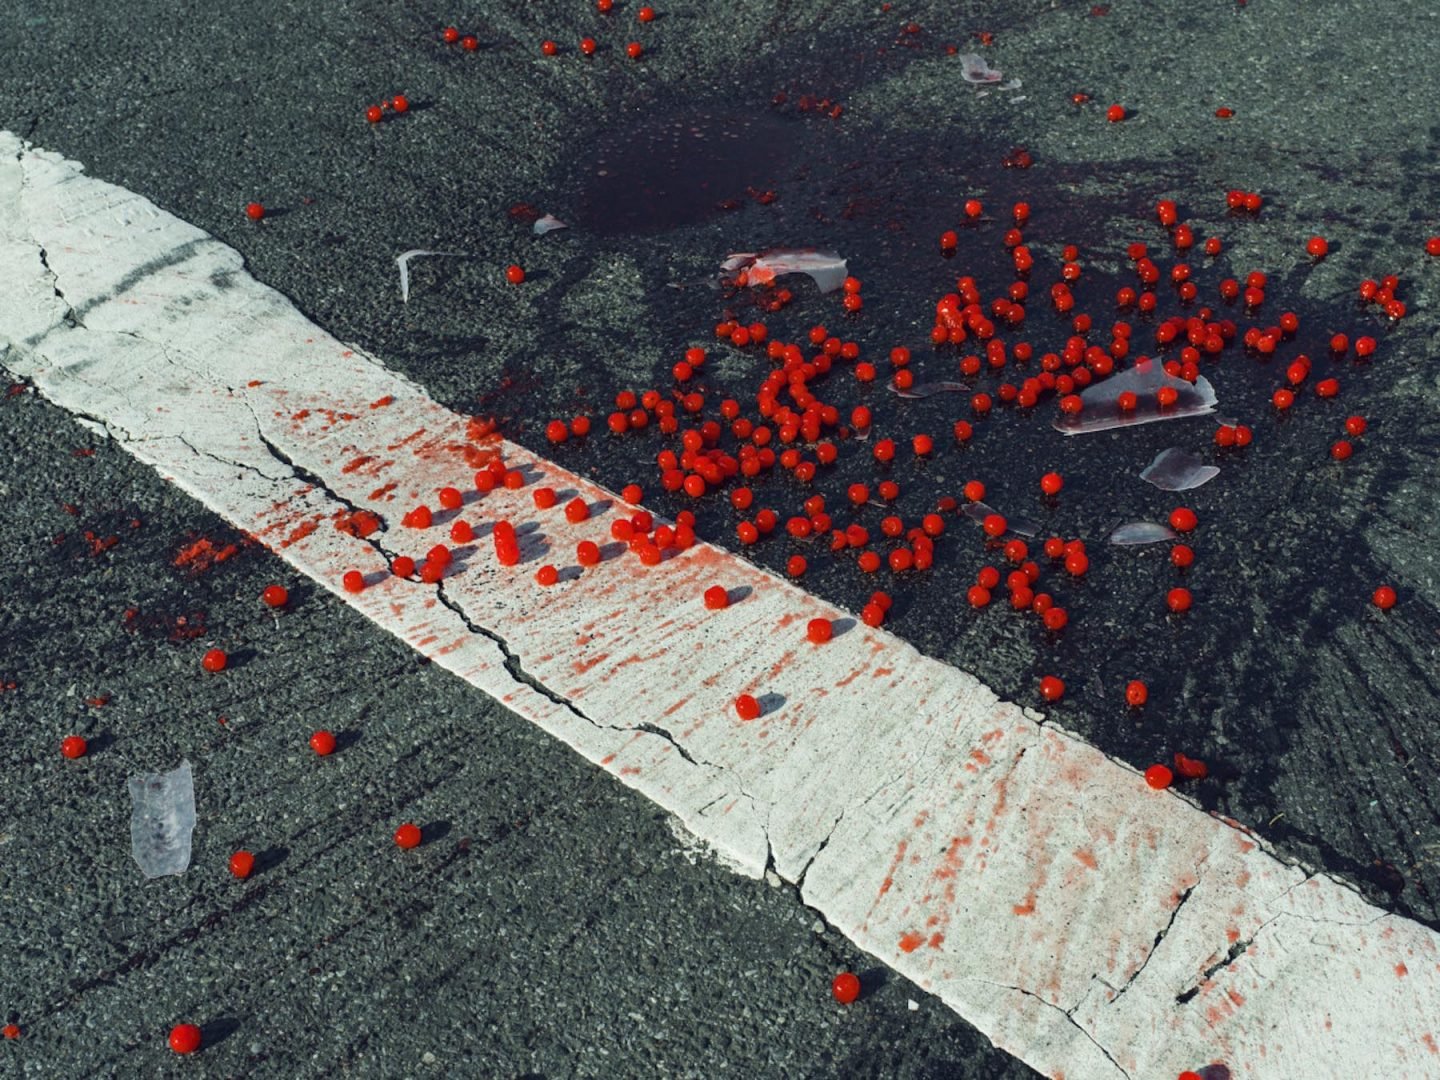 USA. New York City, NY. 2014. Cherries spilled on crosswalk.